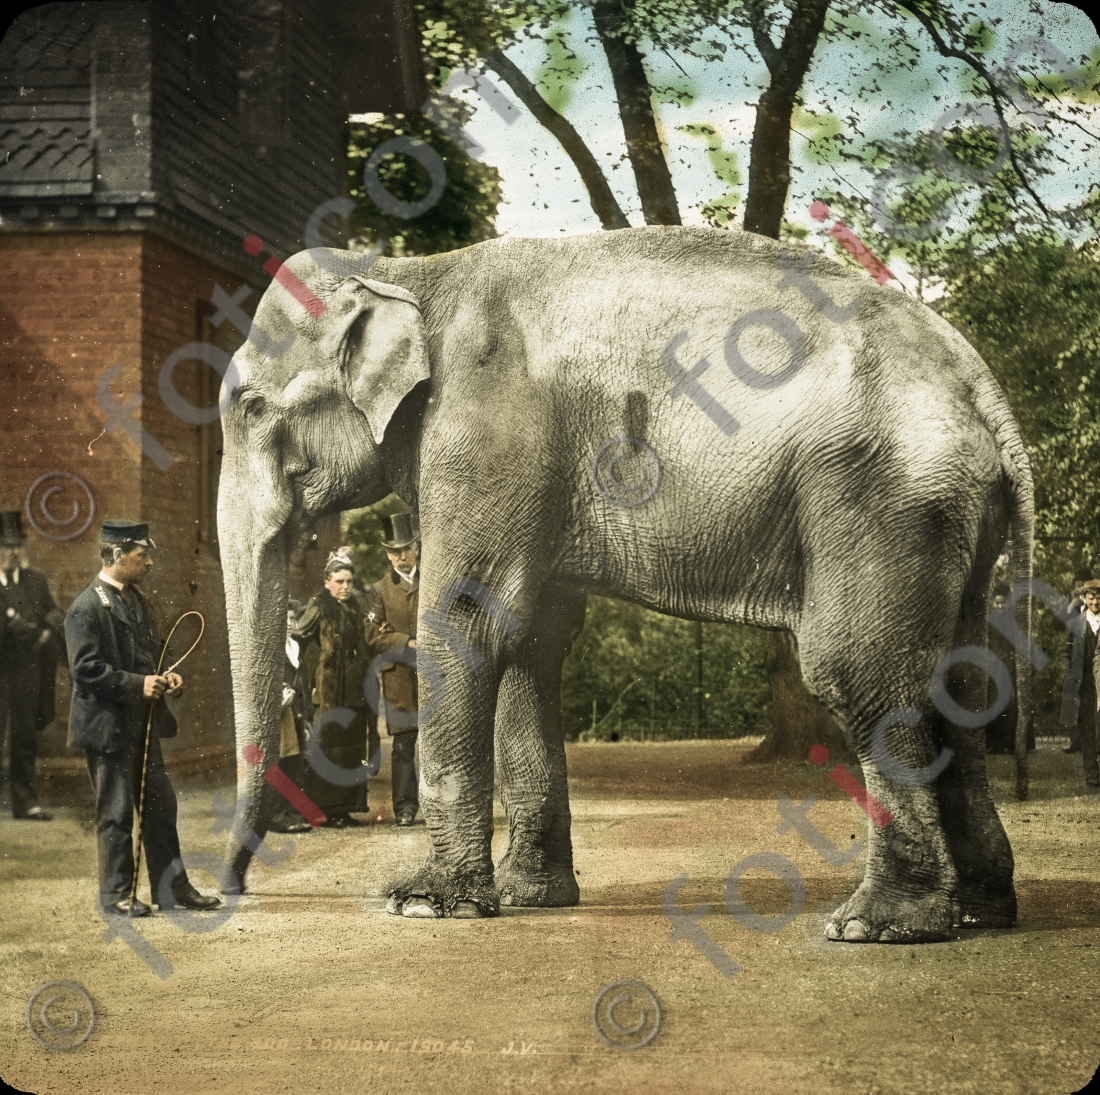 Elefant | Elephant - Foto foticon-simon-167-014.jpg | foticon.de - Bilddatenbank für Motive aus Geschichte und Kultur